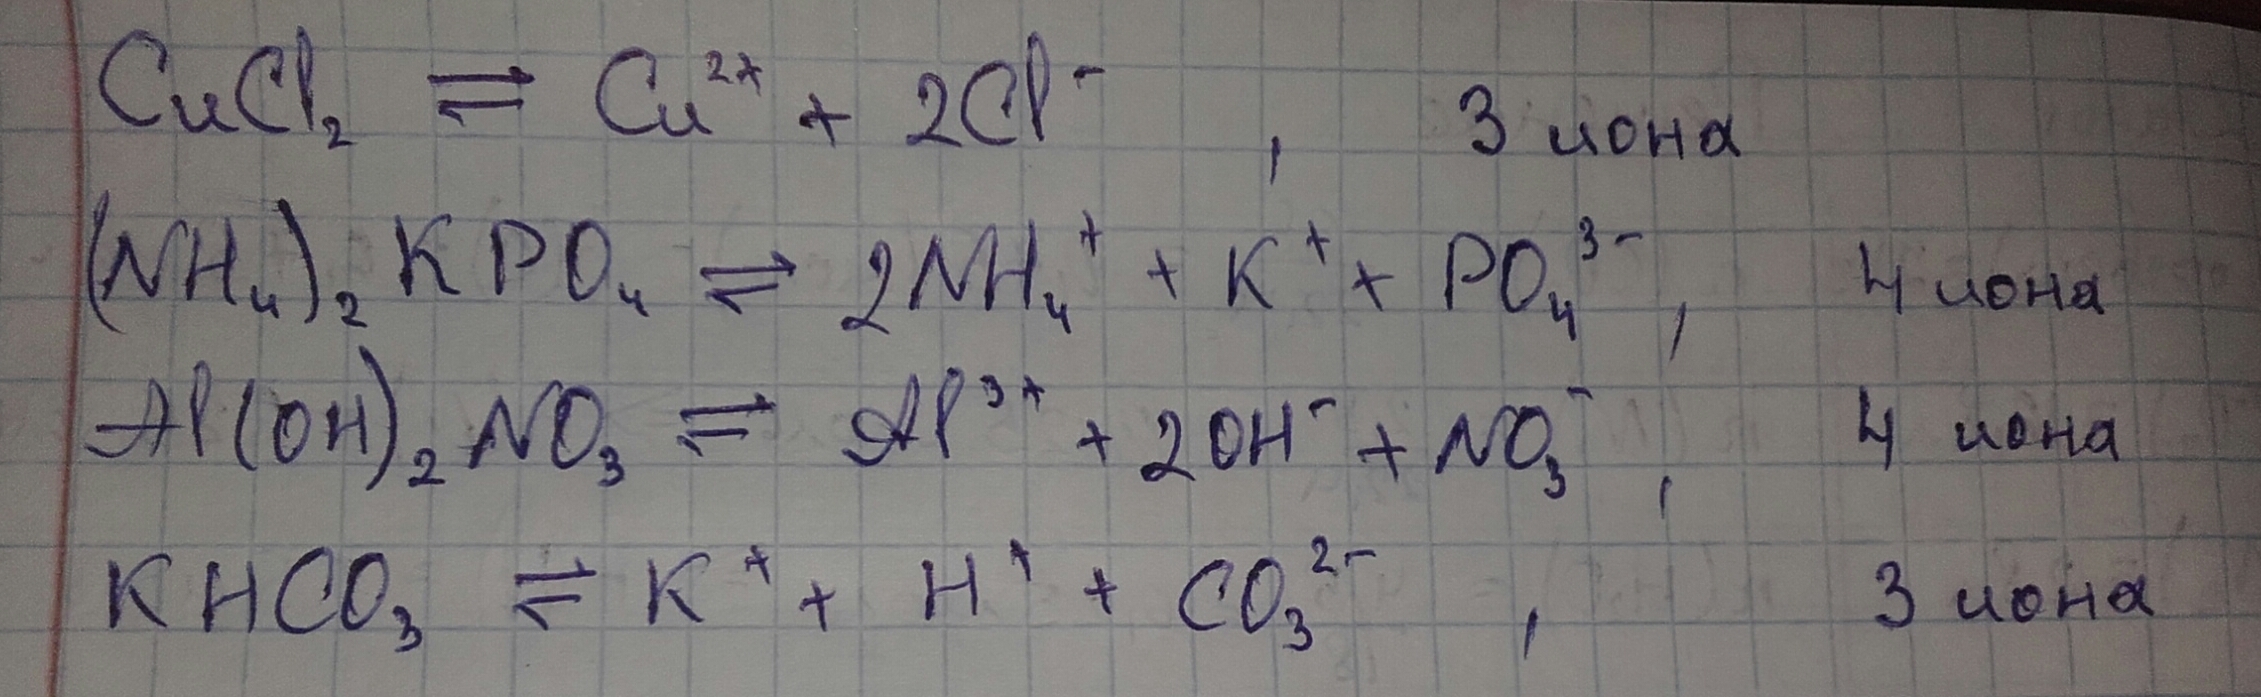 Cucl2 k3po4. Диссоциация веществ cucl2. Уравнение диссоциации cucl2. Уравнение диссоциации cuci2. Электрическая диссоциация cucl2.